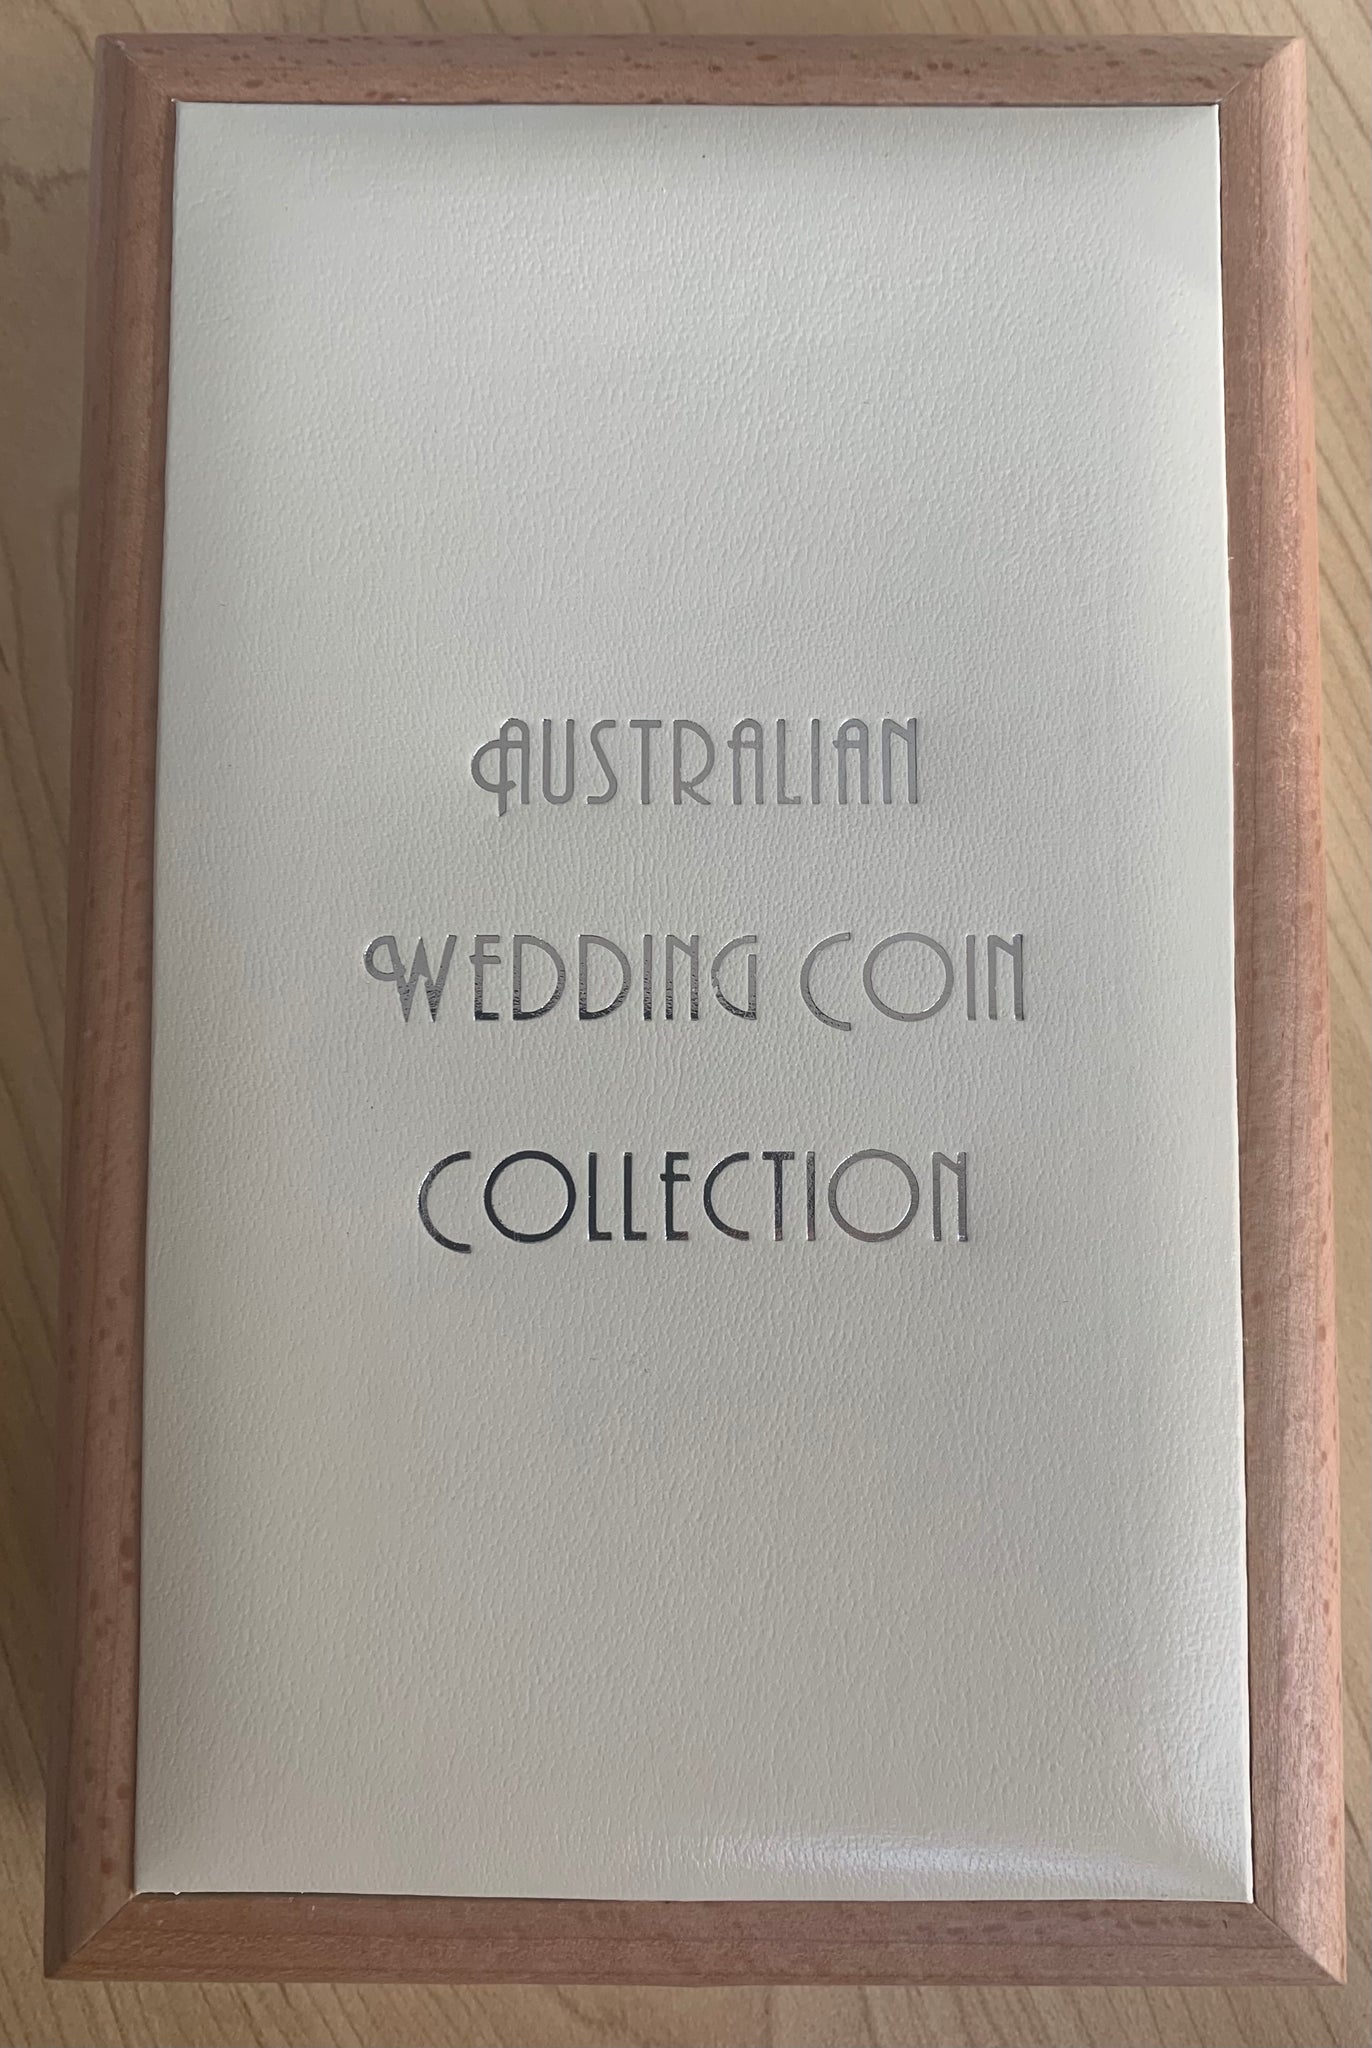 Australia 2003 Royal Australian Mint Wedding Coin Collection. Ideal Anniversary Gift.